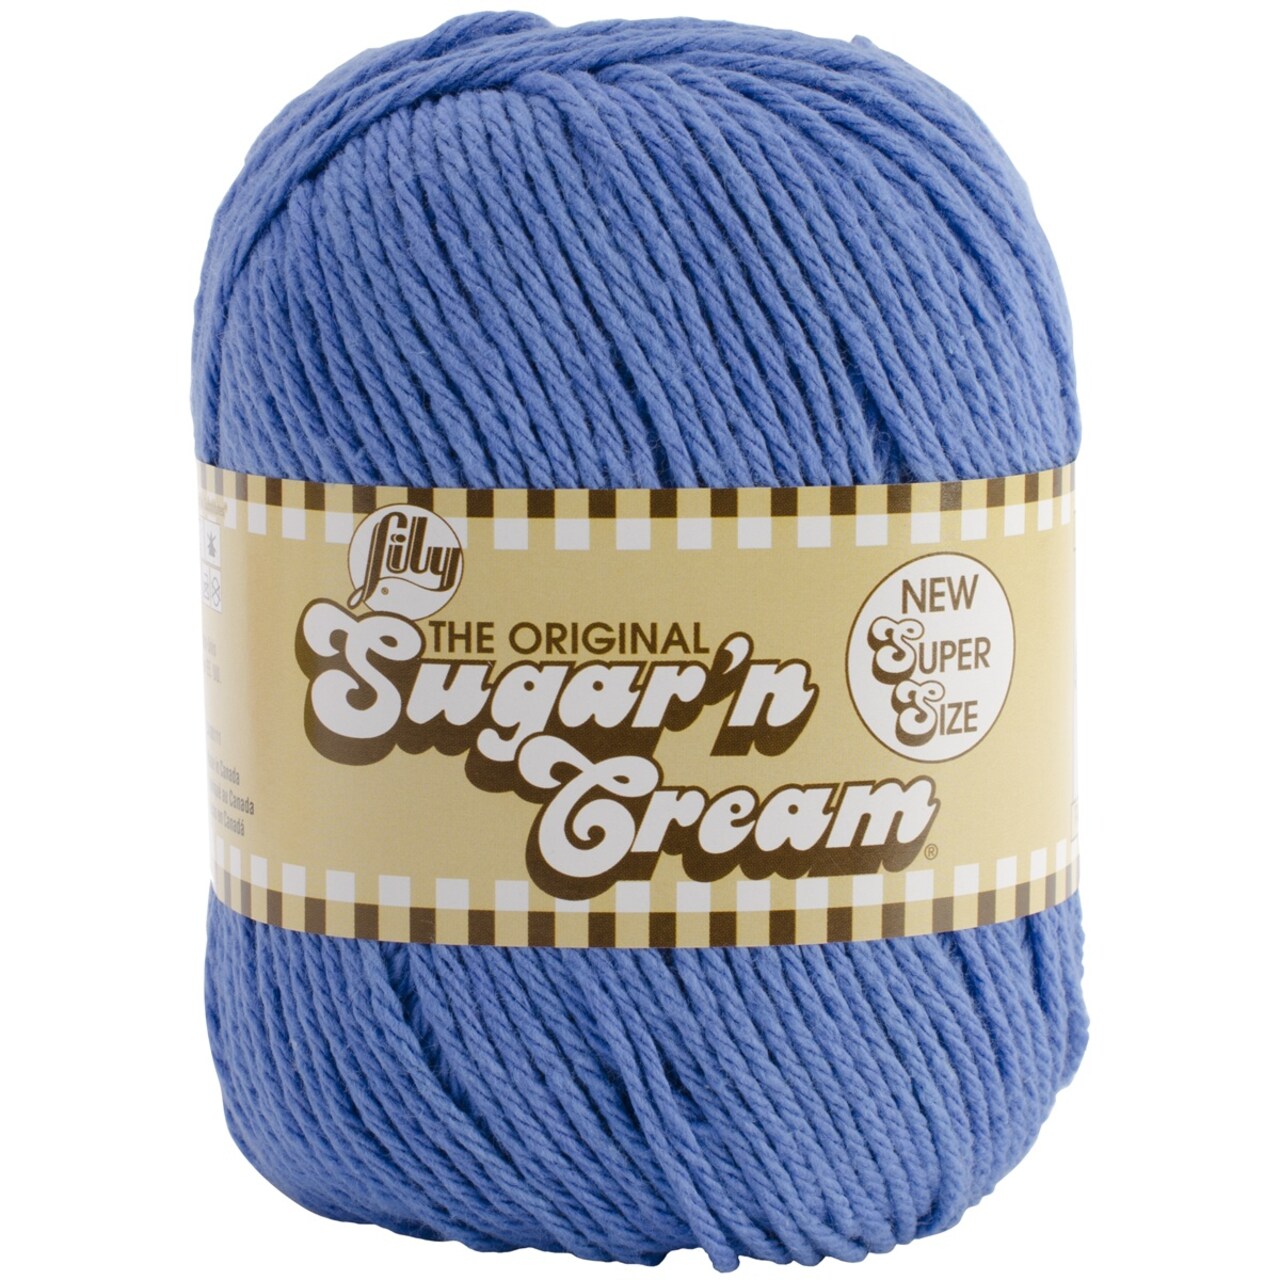 Lily Sugar'N Cream Super Size Blueberry Yarn - 6 Pack of 113g/4oz